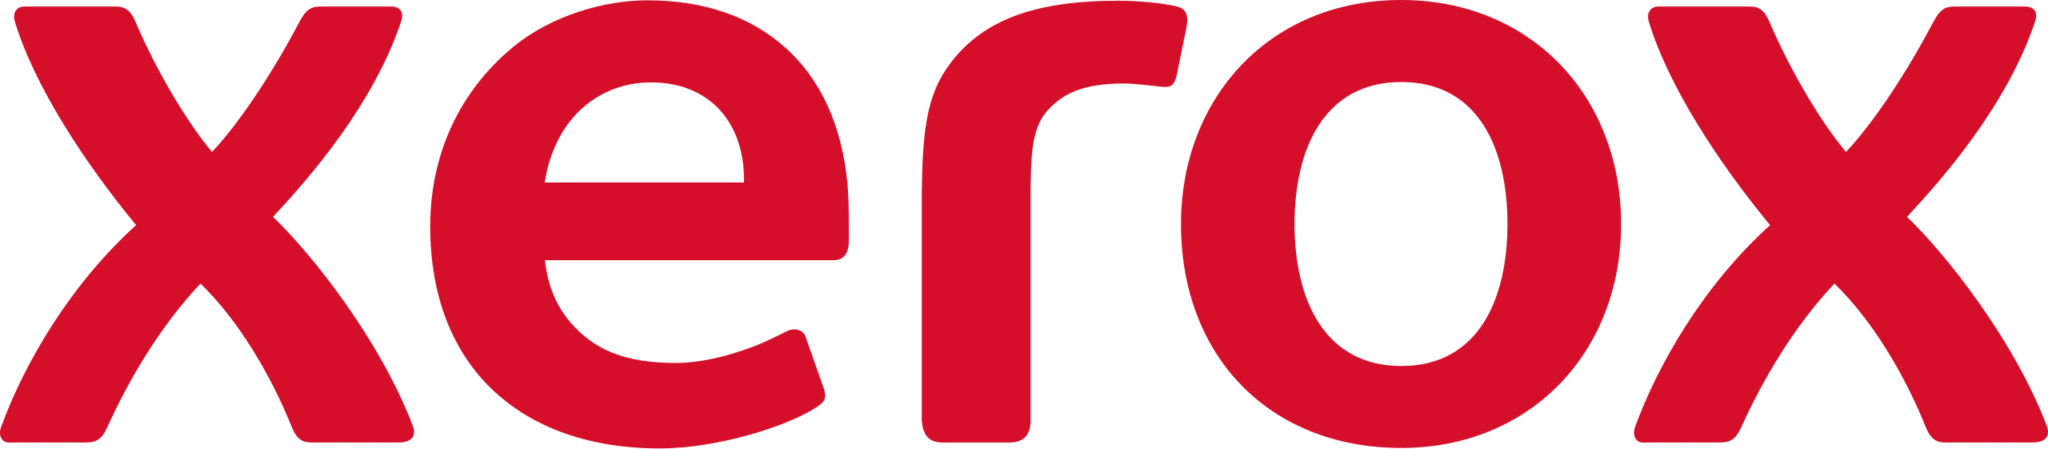 Xerox Logo - Partners in Dubai